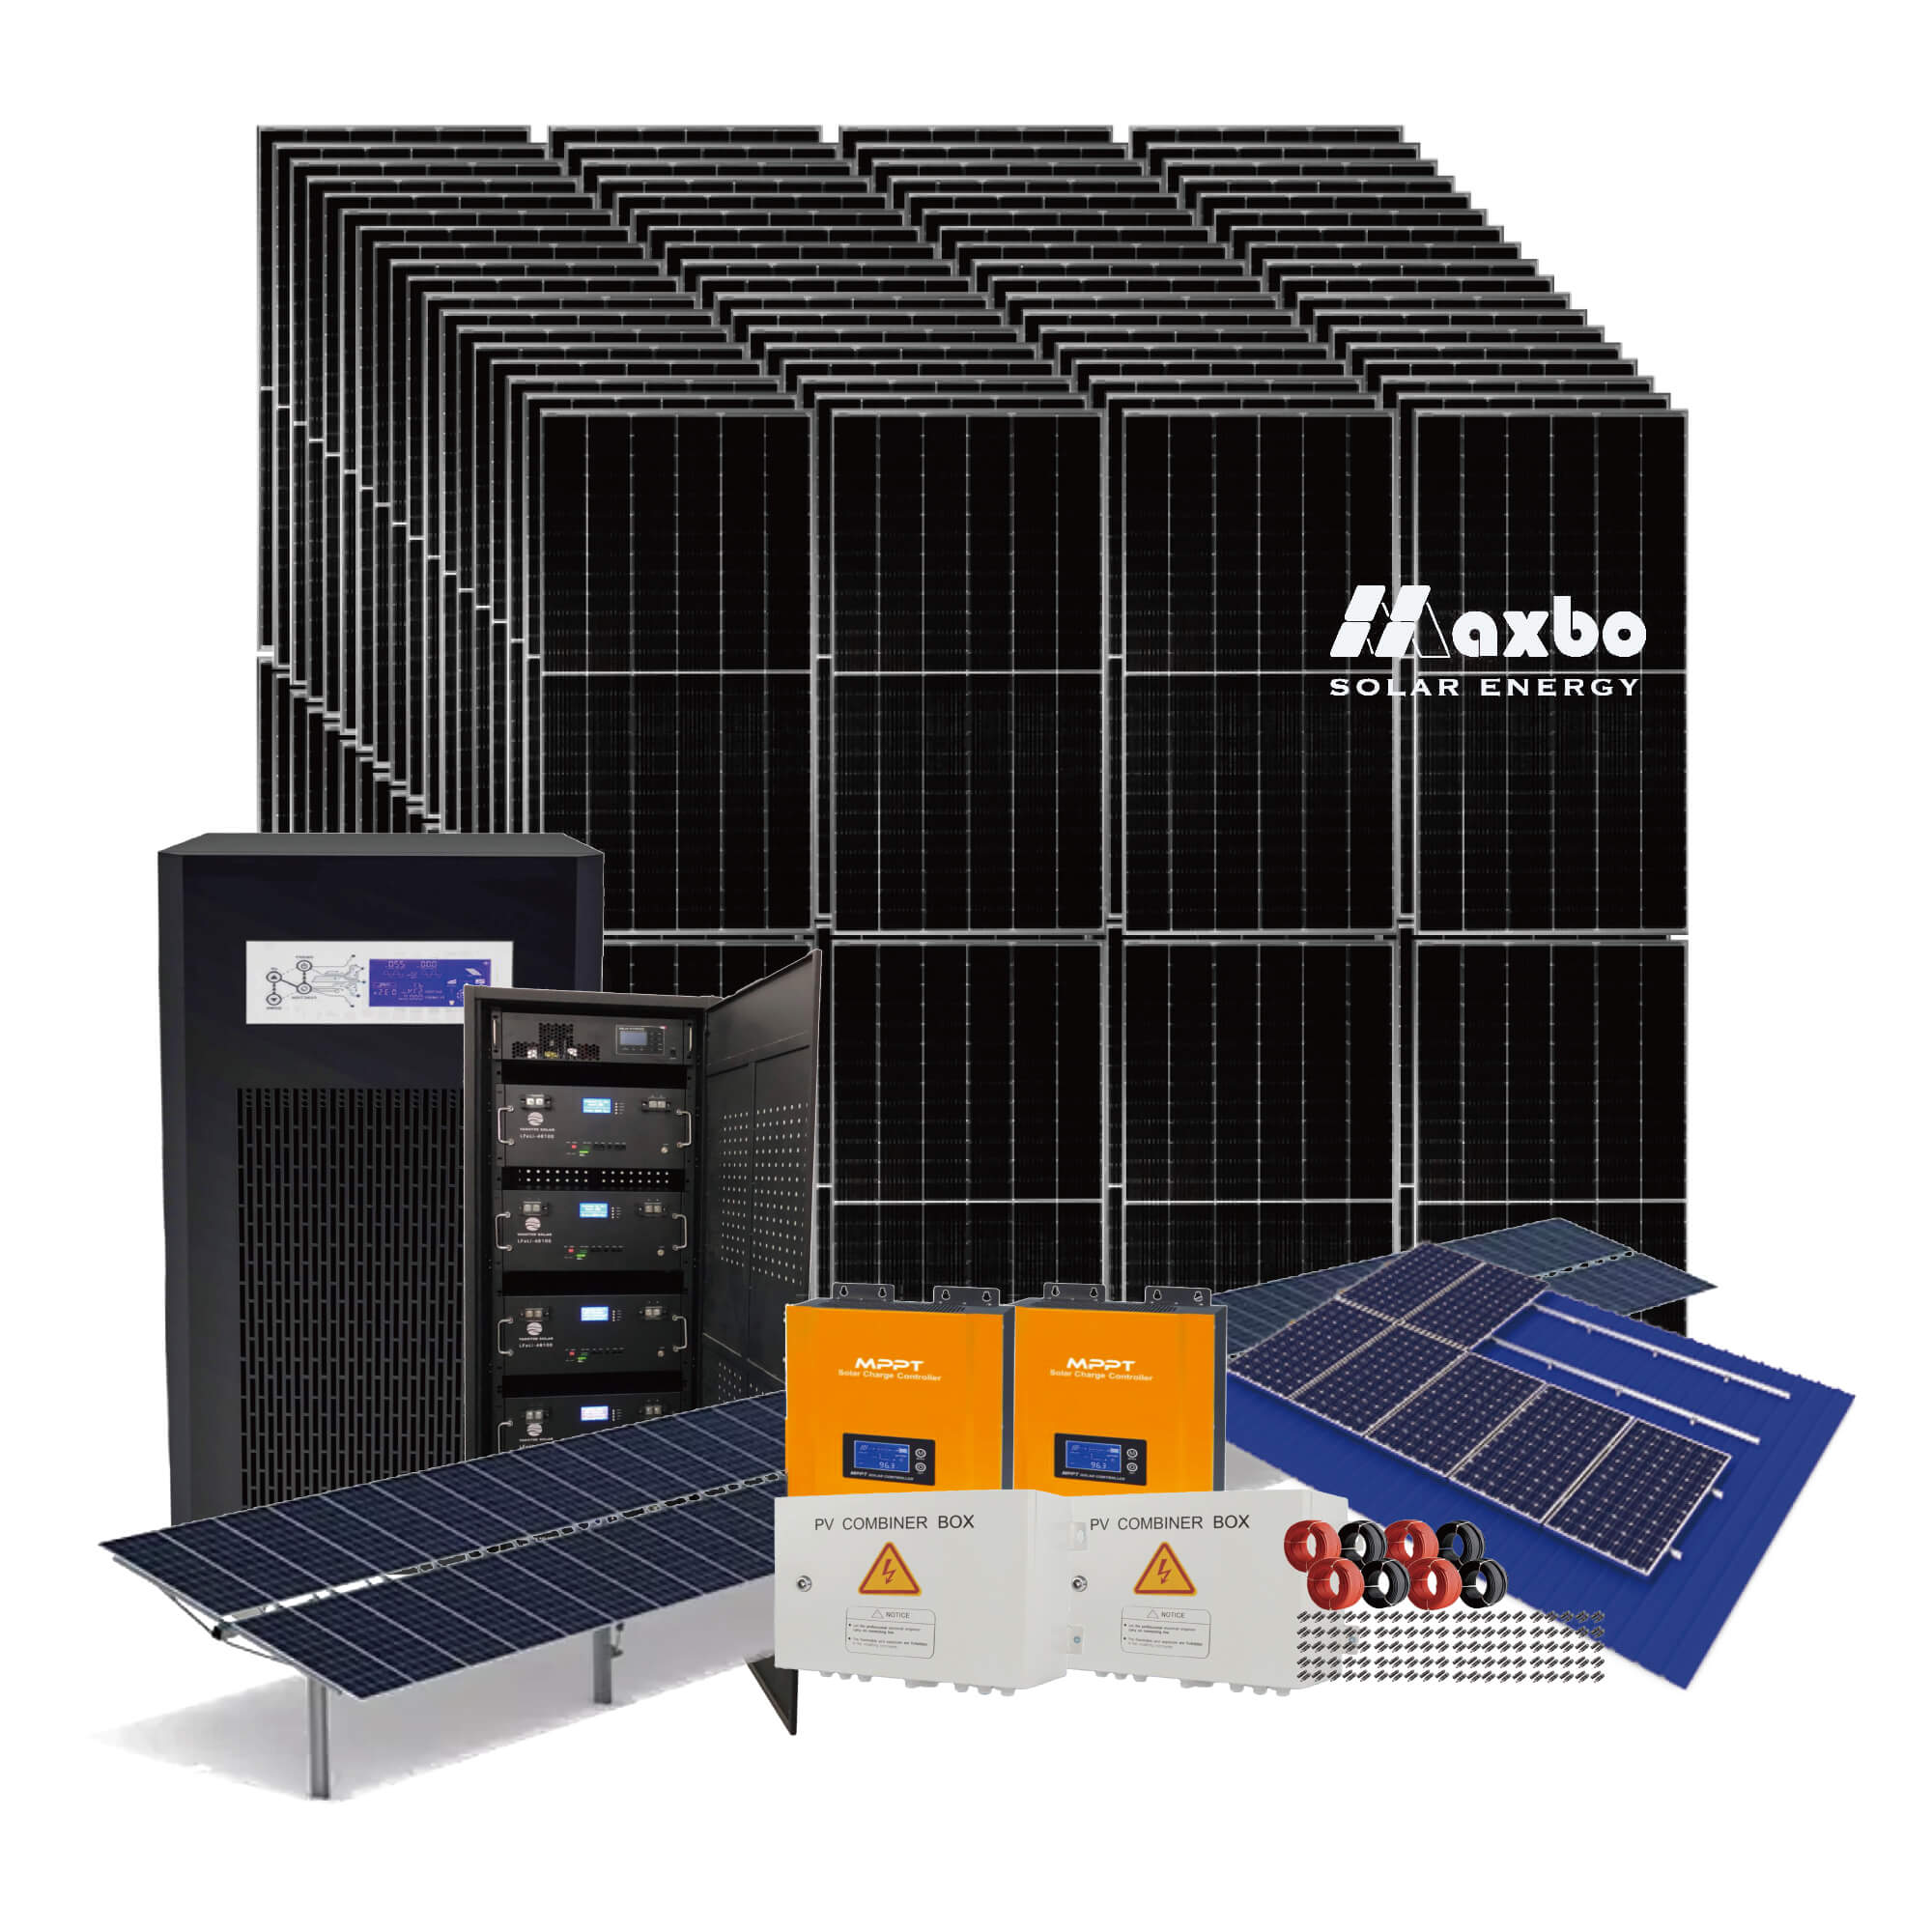 80kW Off Grid Solar Powered System Solutions Maxbo කර්මාන්ත ශාලාව සියල්ල එකින් එක